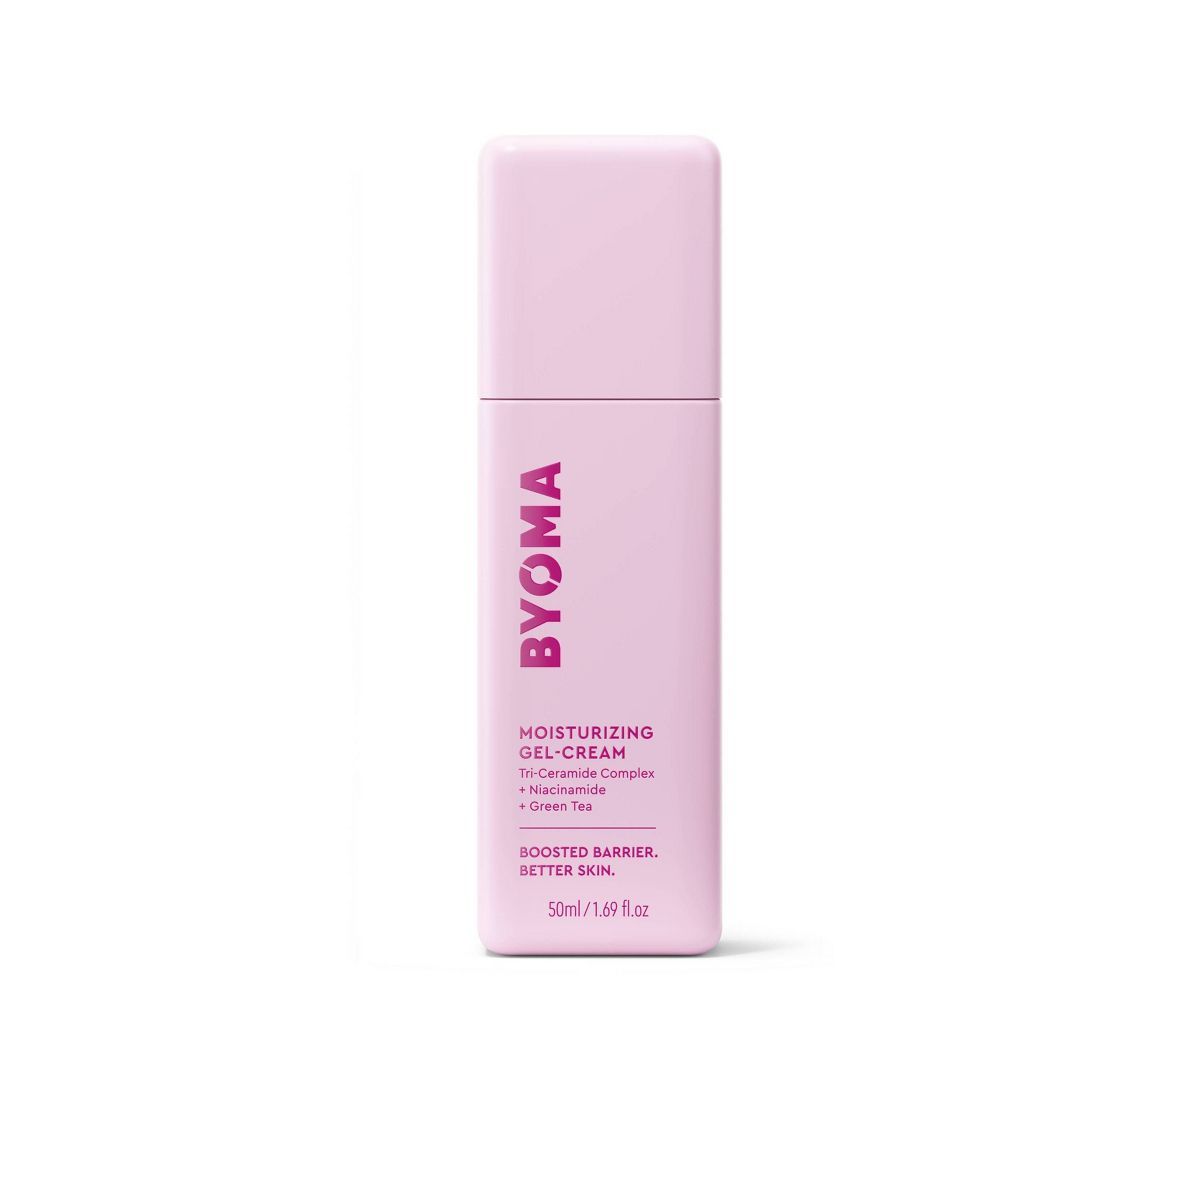 BYOMA Gel Cream Moisturizer - 1.69 fl oz | Target